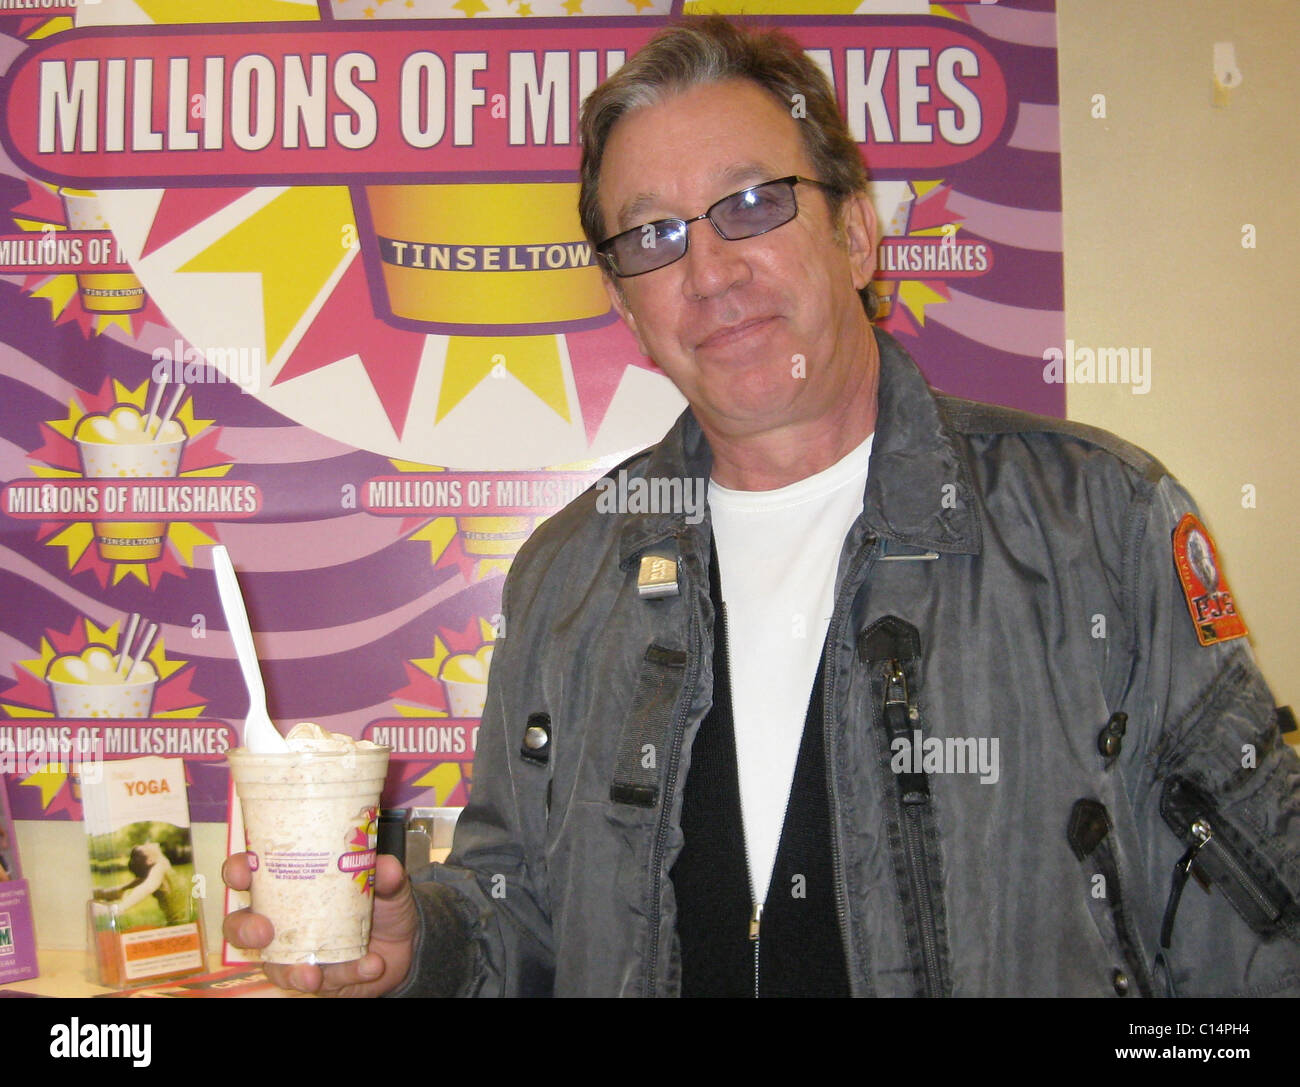 Tim Allen visits Millions of Milkshakes in West Hollywood Los Angeles, California - 28.01.09 Stock Photo